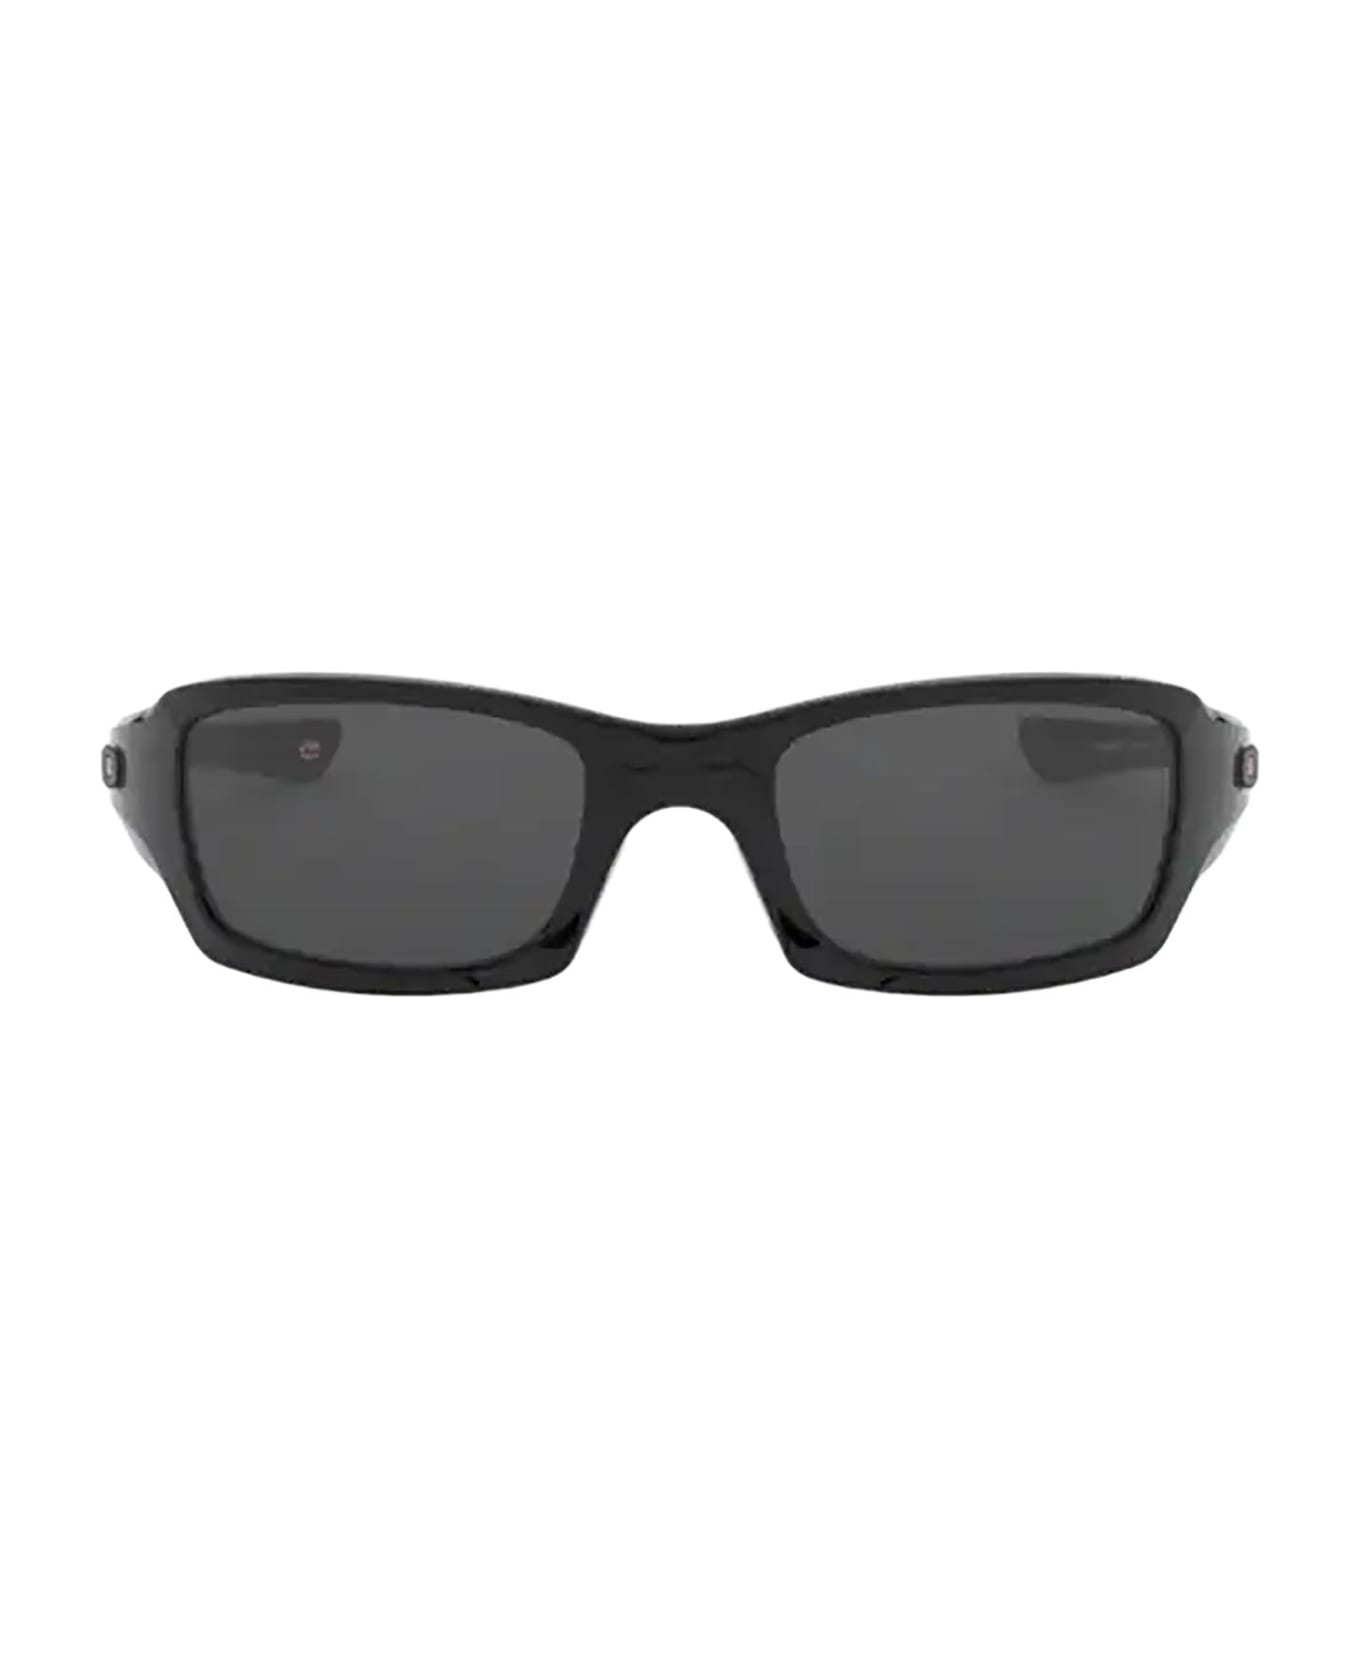 Oakley Oo9238 Polished Black Sunglasses - Polished Black サングラス